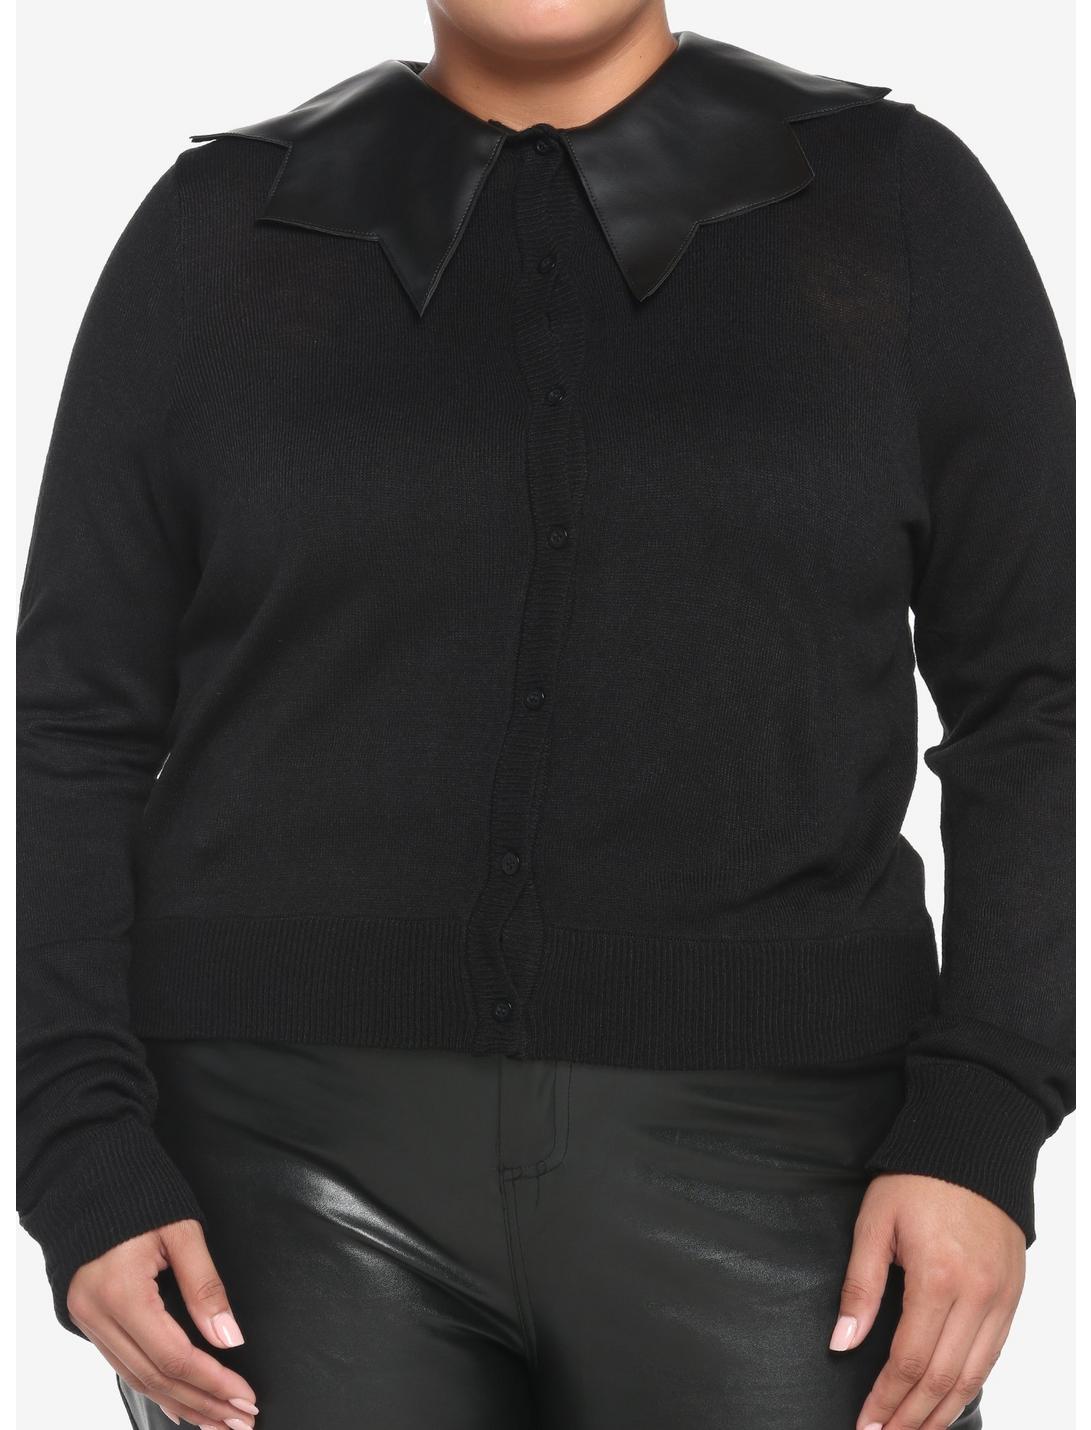 Black Bat Wing Collar Girls Cardigan Plus Size, BLACK, hi-res